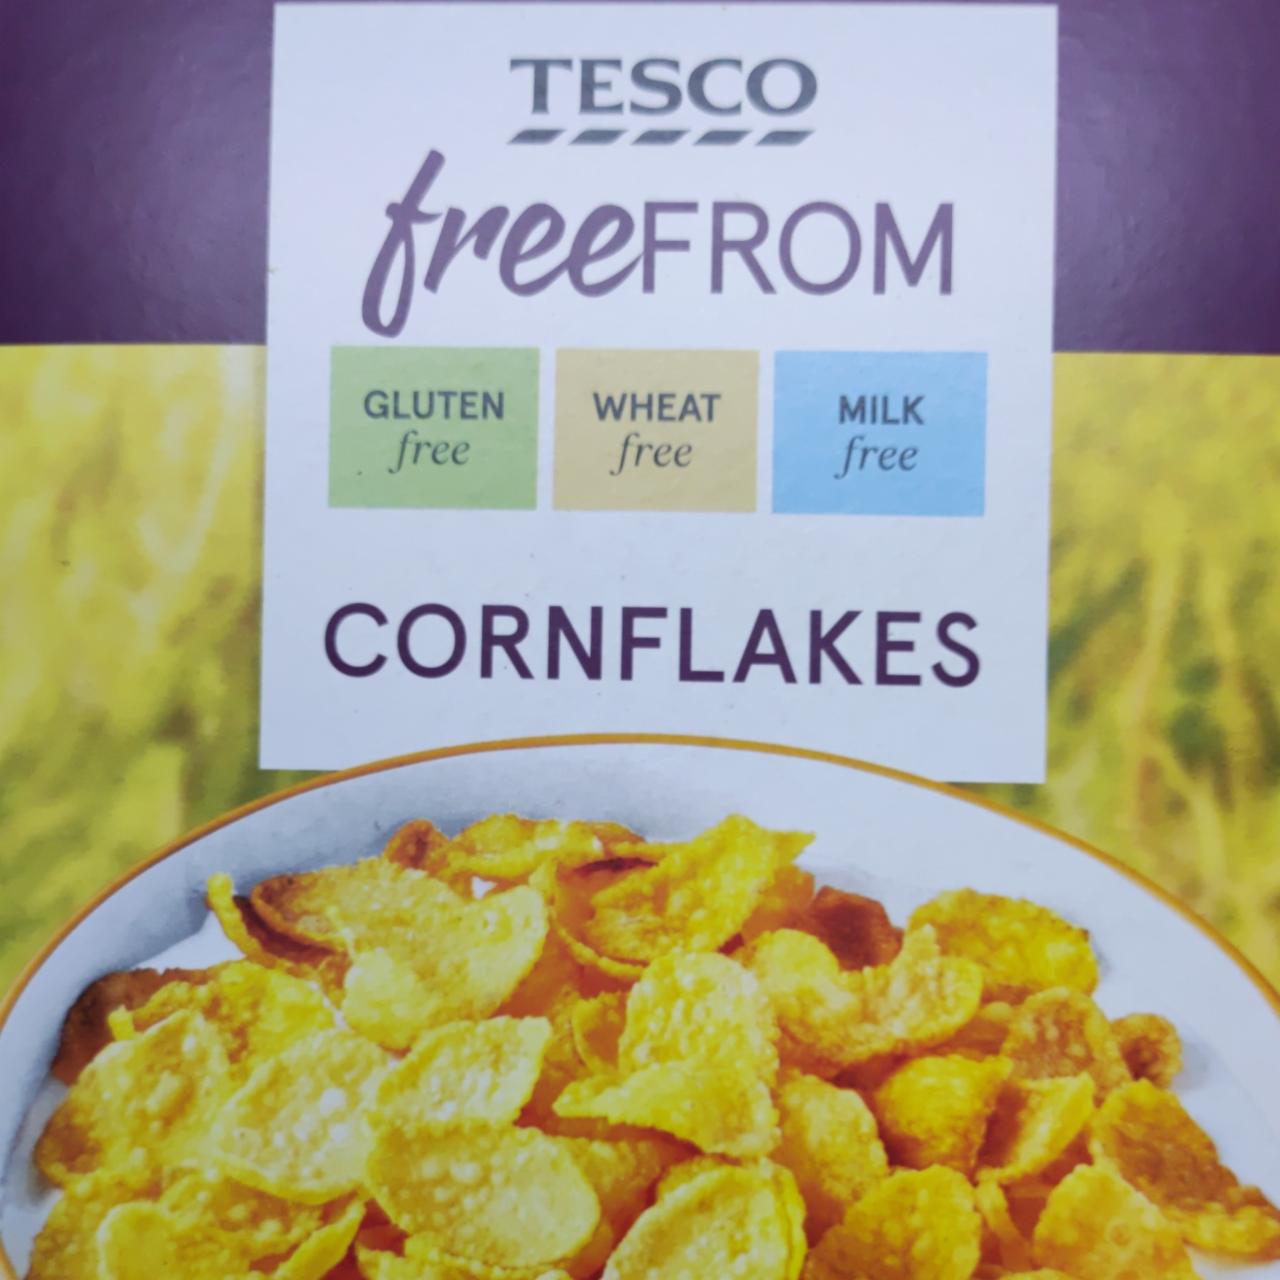 Képek - Cornflakes Tesco freefrom